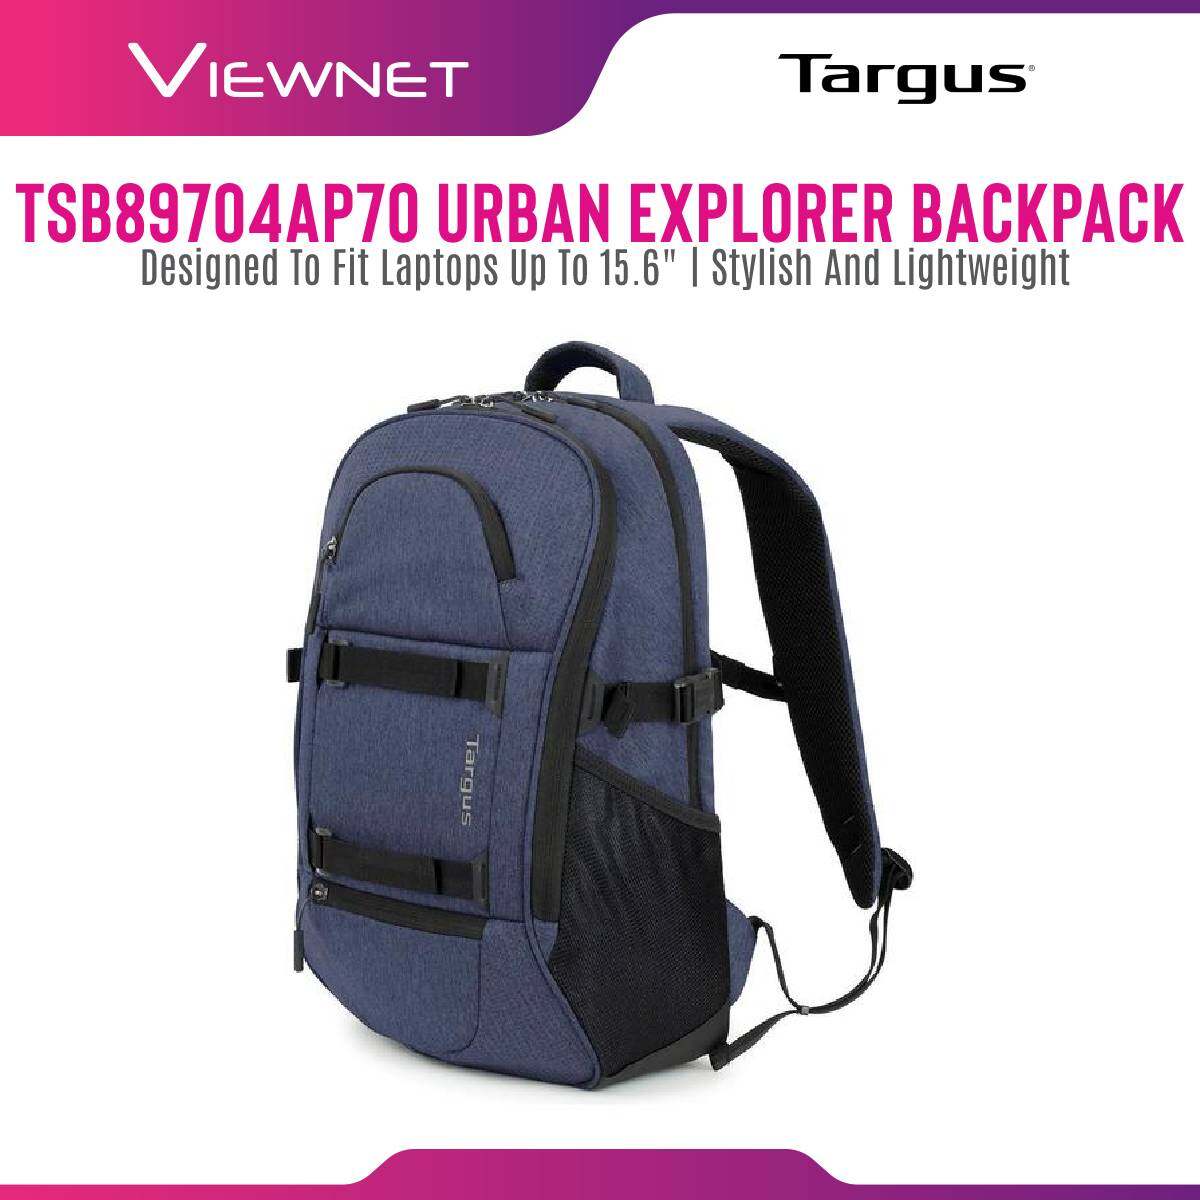 TARGUS TSB89704AP70 15.6 Urban Explorer Backpack Grey/Blue